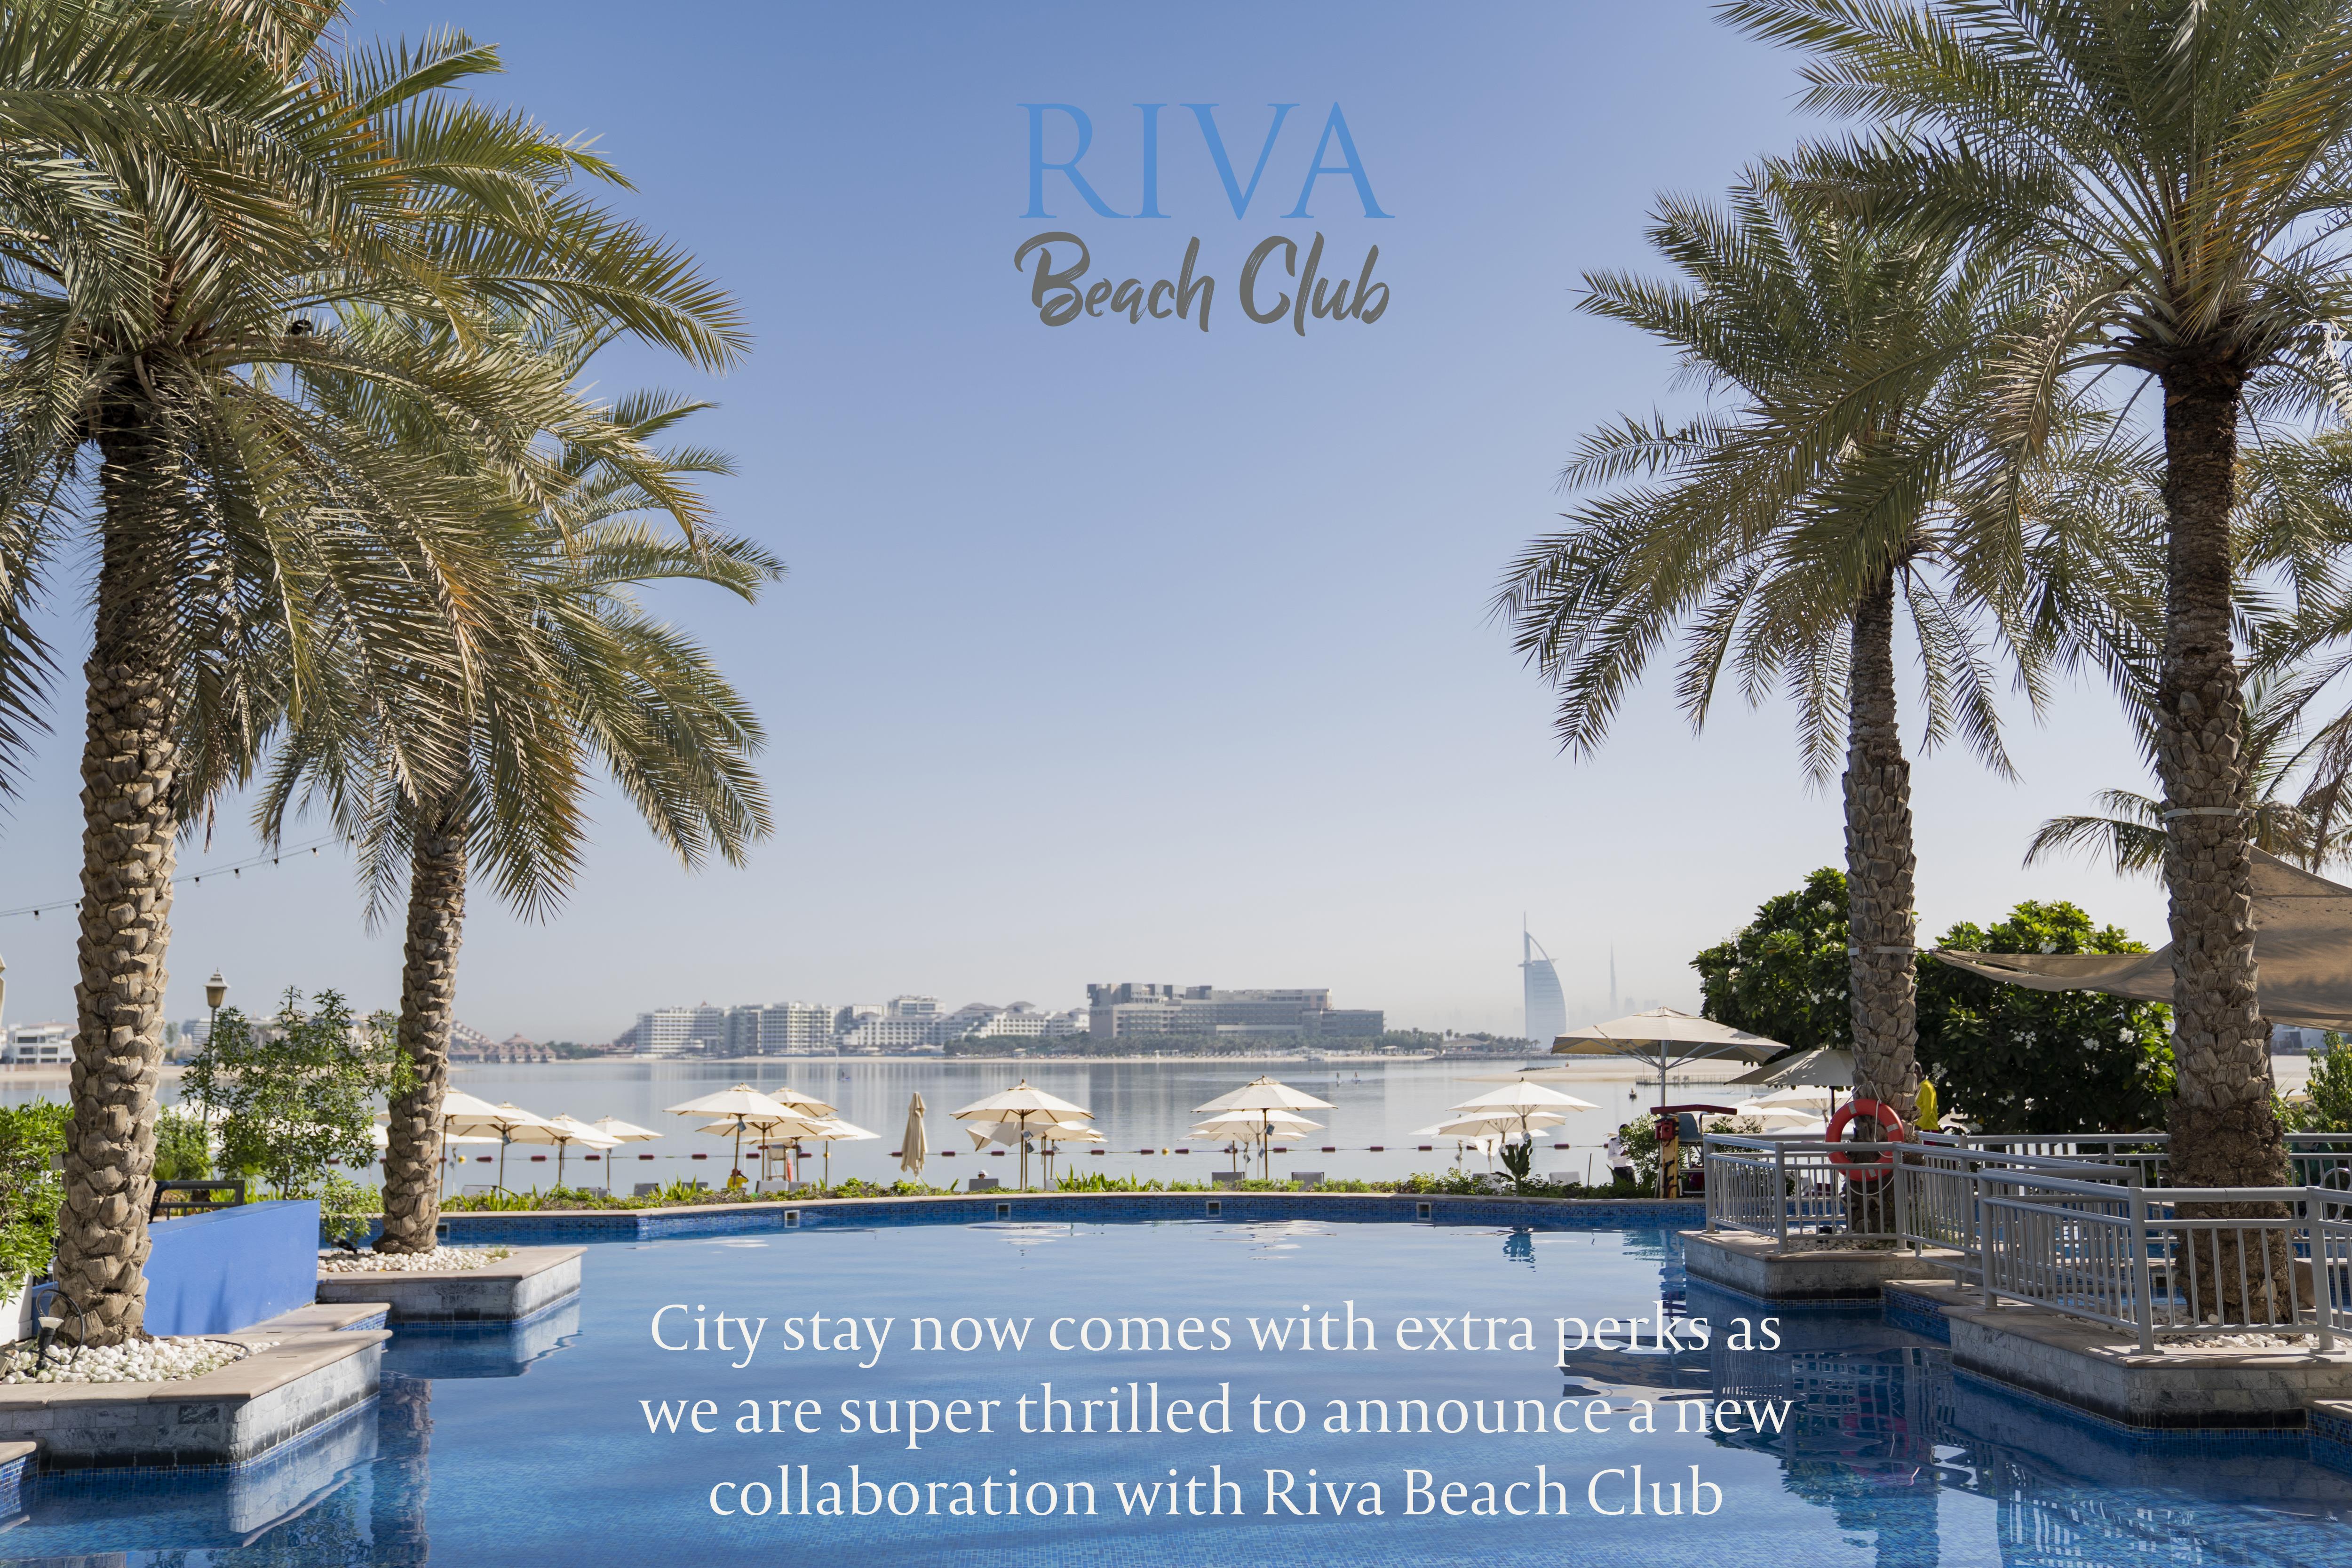 Avani Ibn Battuta Dubai Hotel 4*